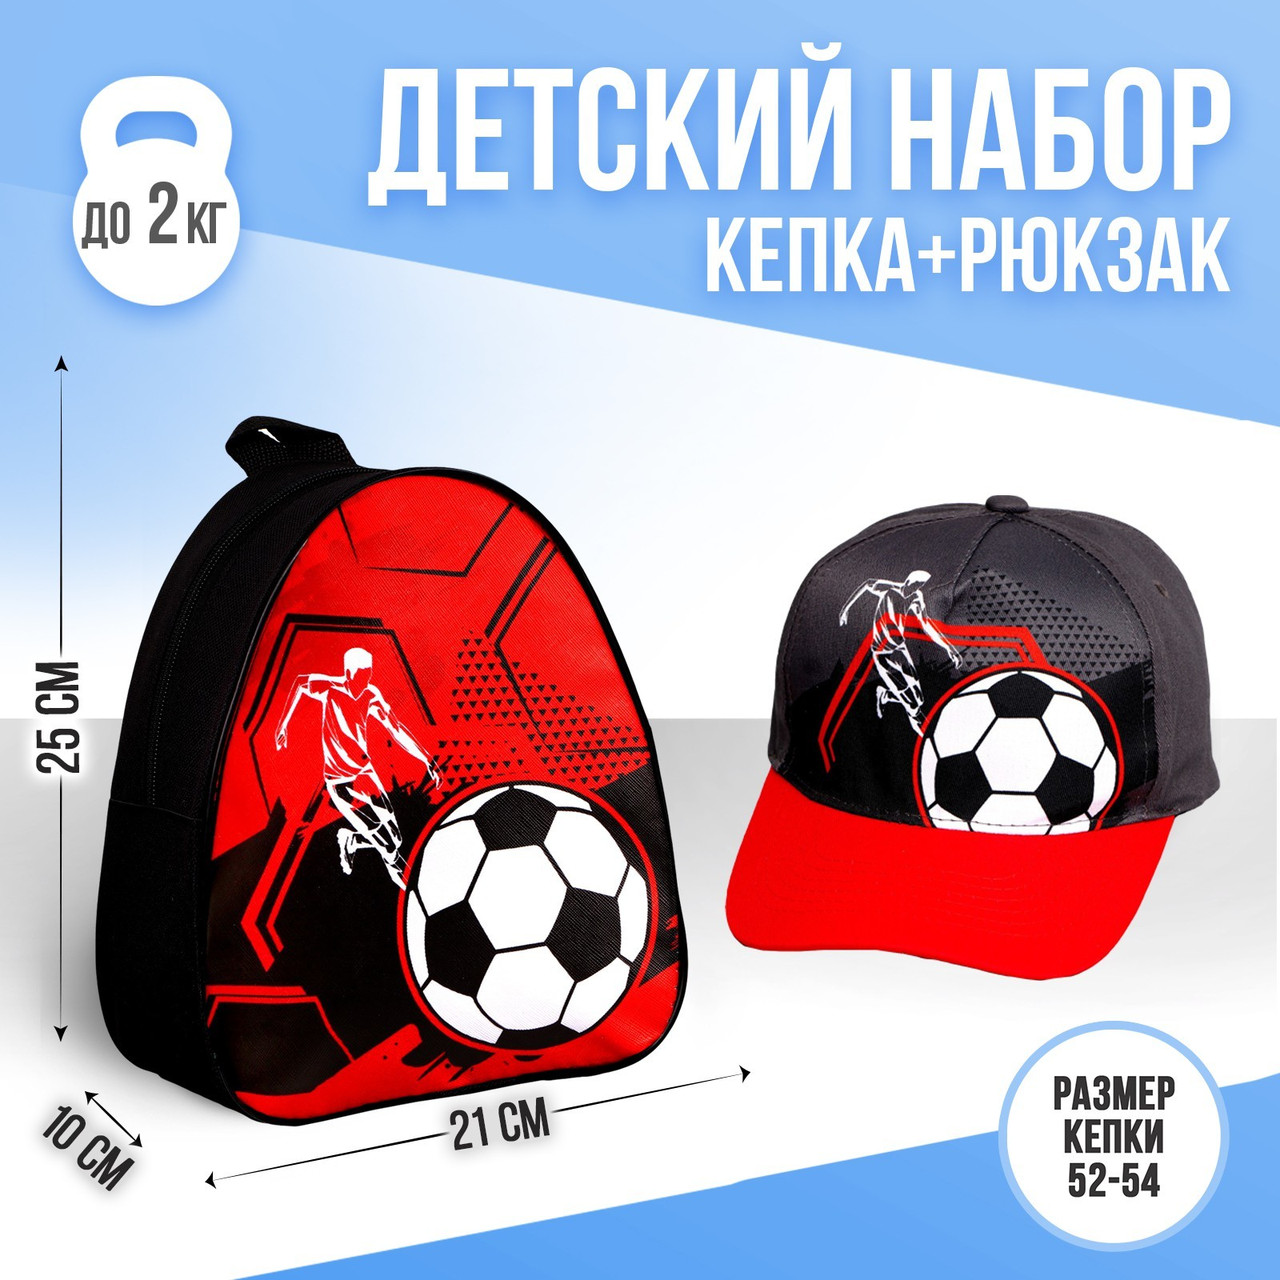 Детский набор Goal /Единорожка рюкзак, кепка